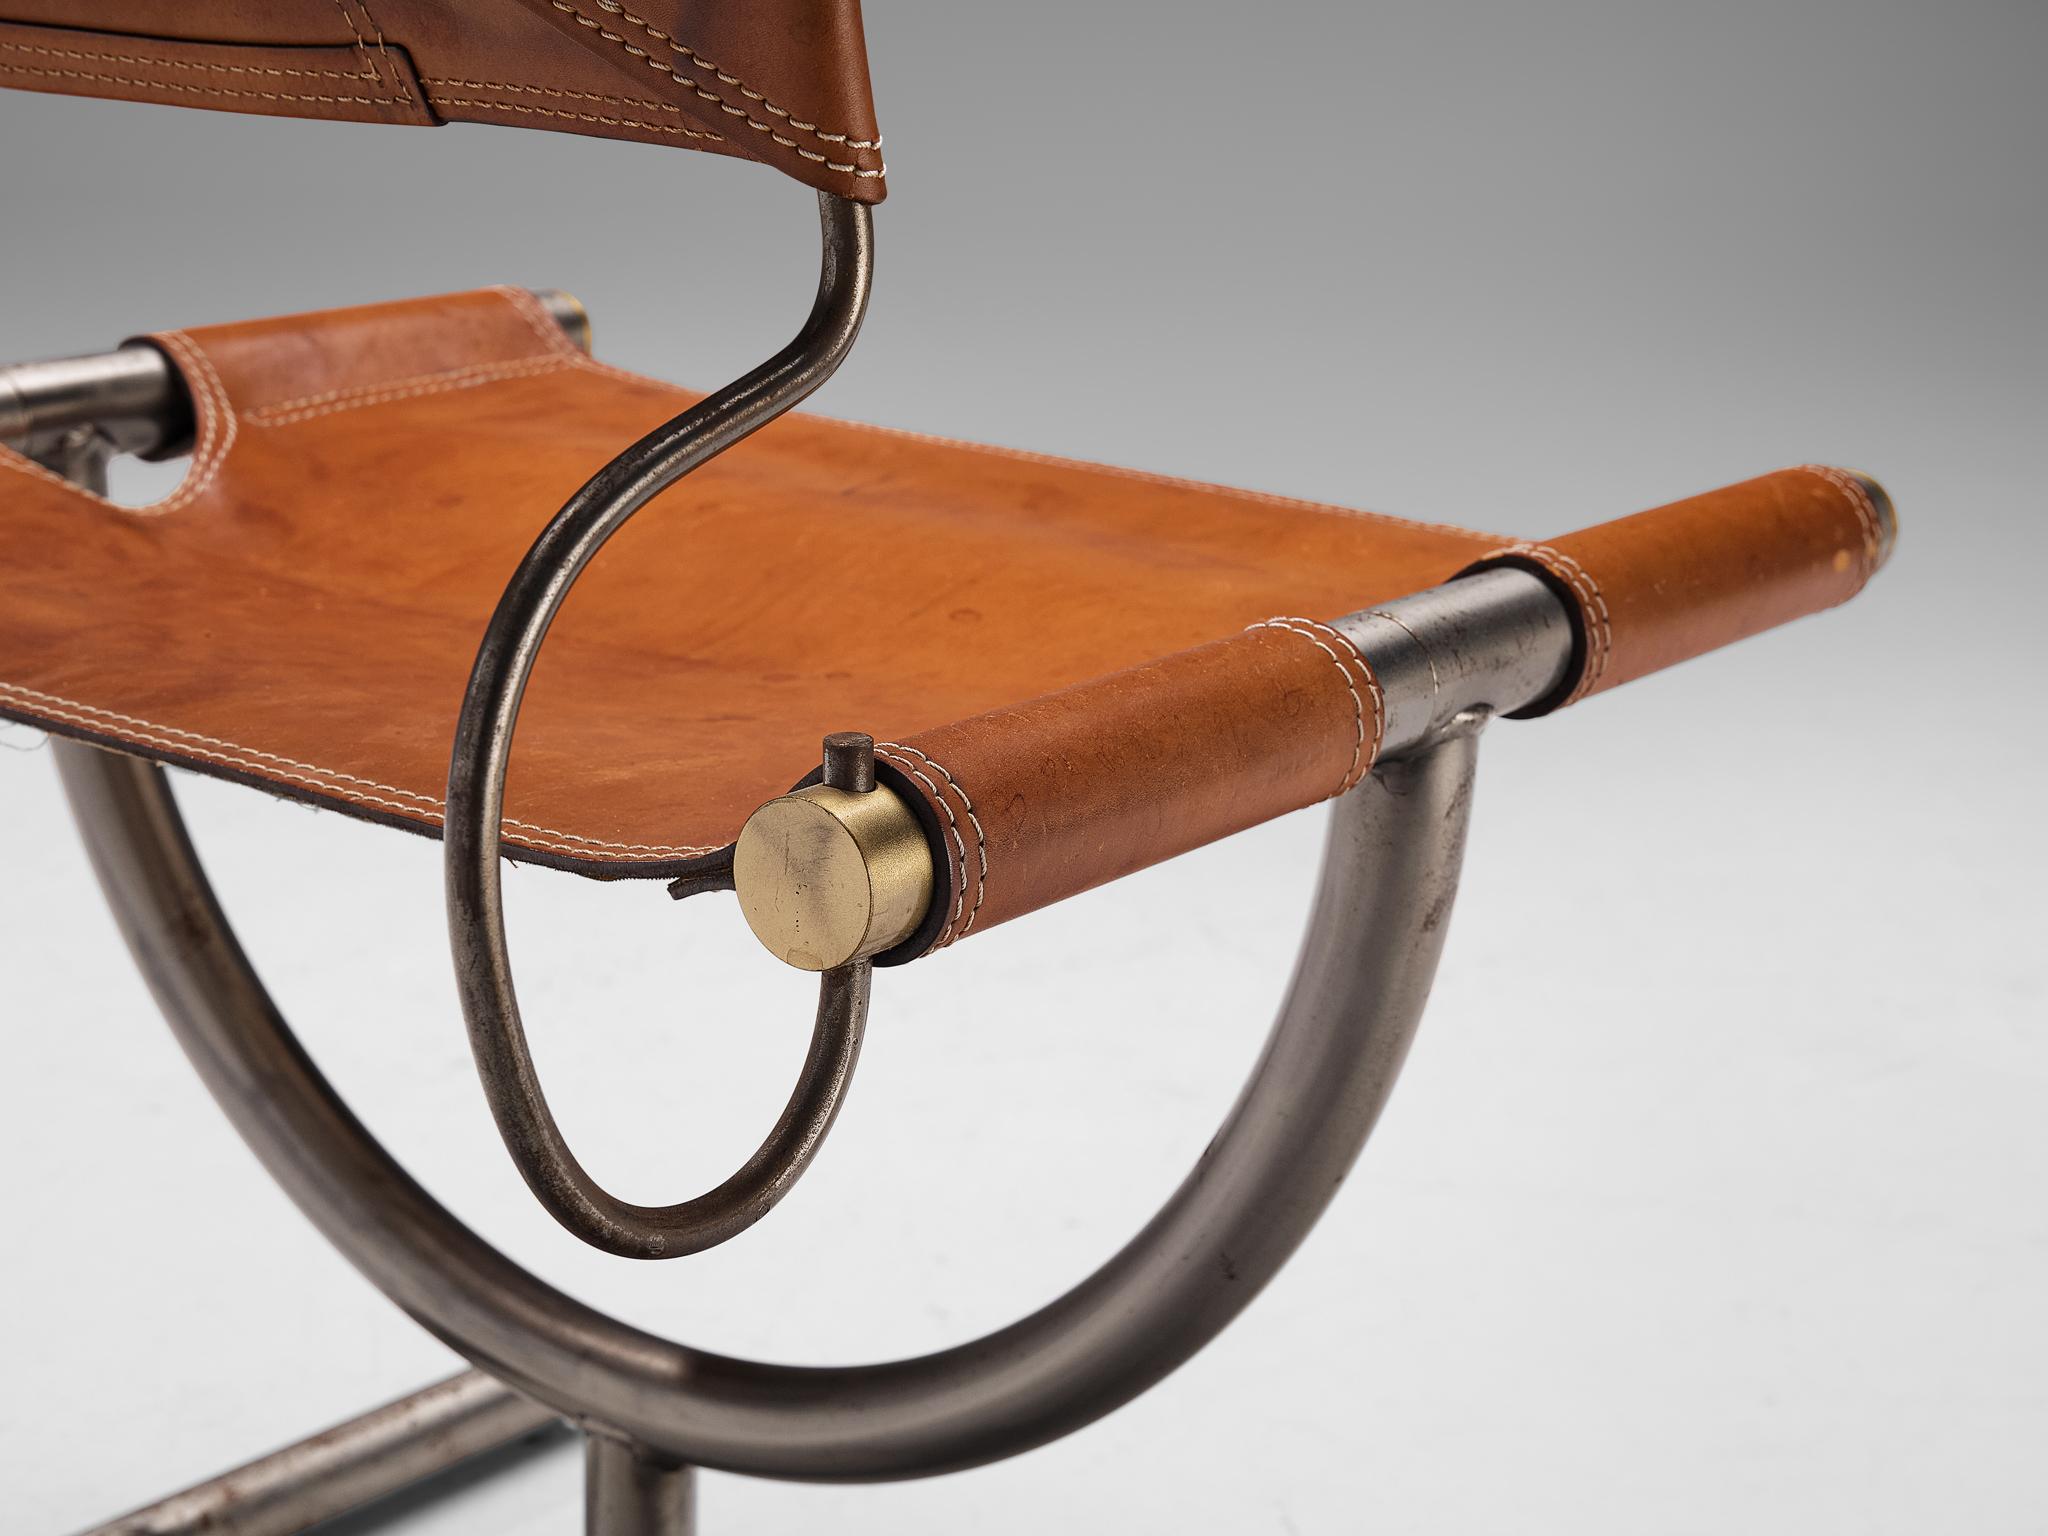 Afra & Tobia Scarpa 'Benetton' Stuhl aus Leder und Stahl  (Messing) im Angebot